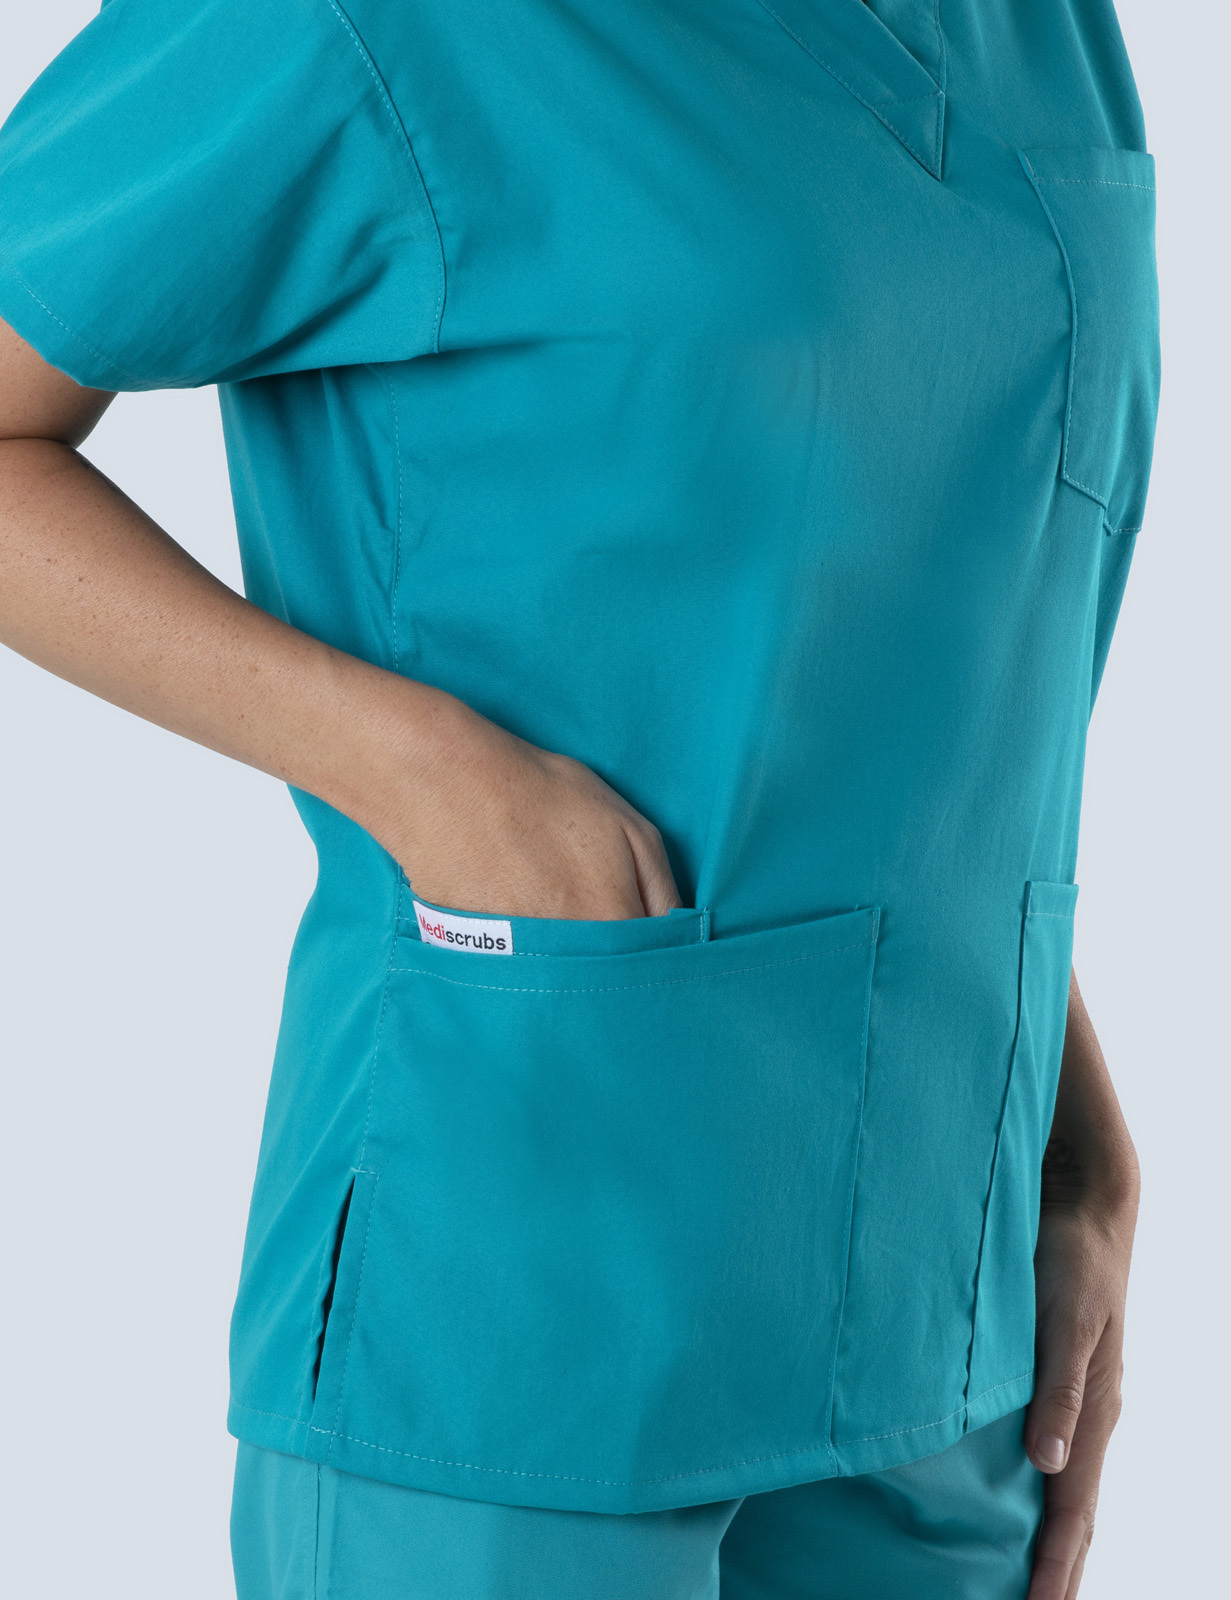 Gold Coast University Hospital - MAU RN (4 Pocket Scrub Top and Cargo Pants in Teal incl Logos)